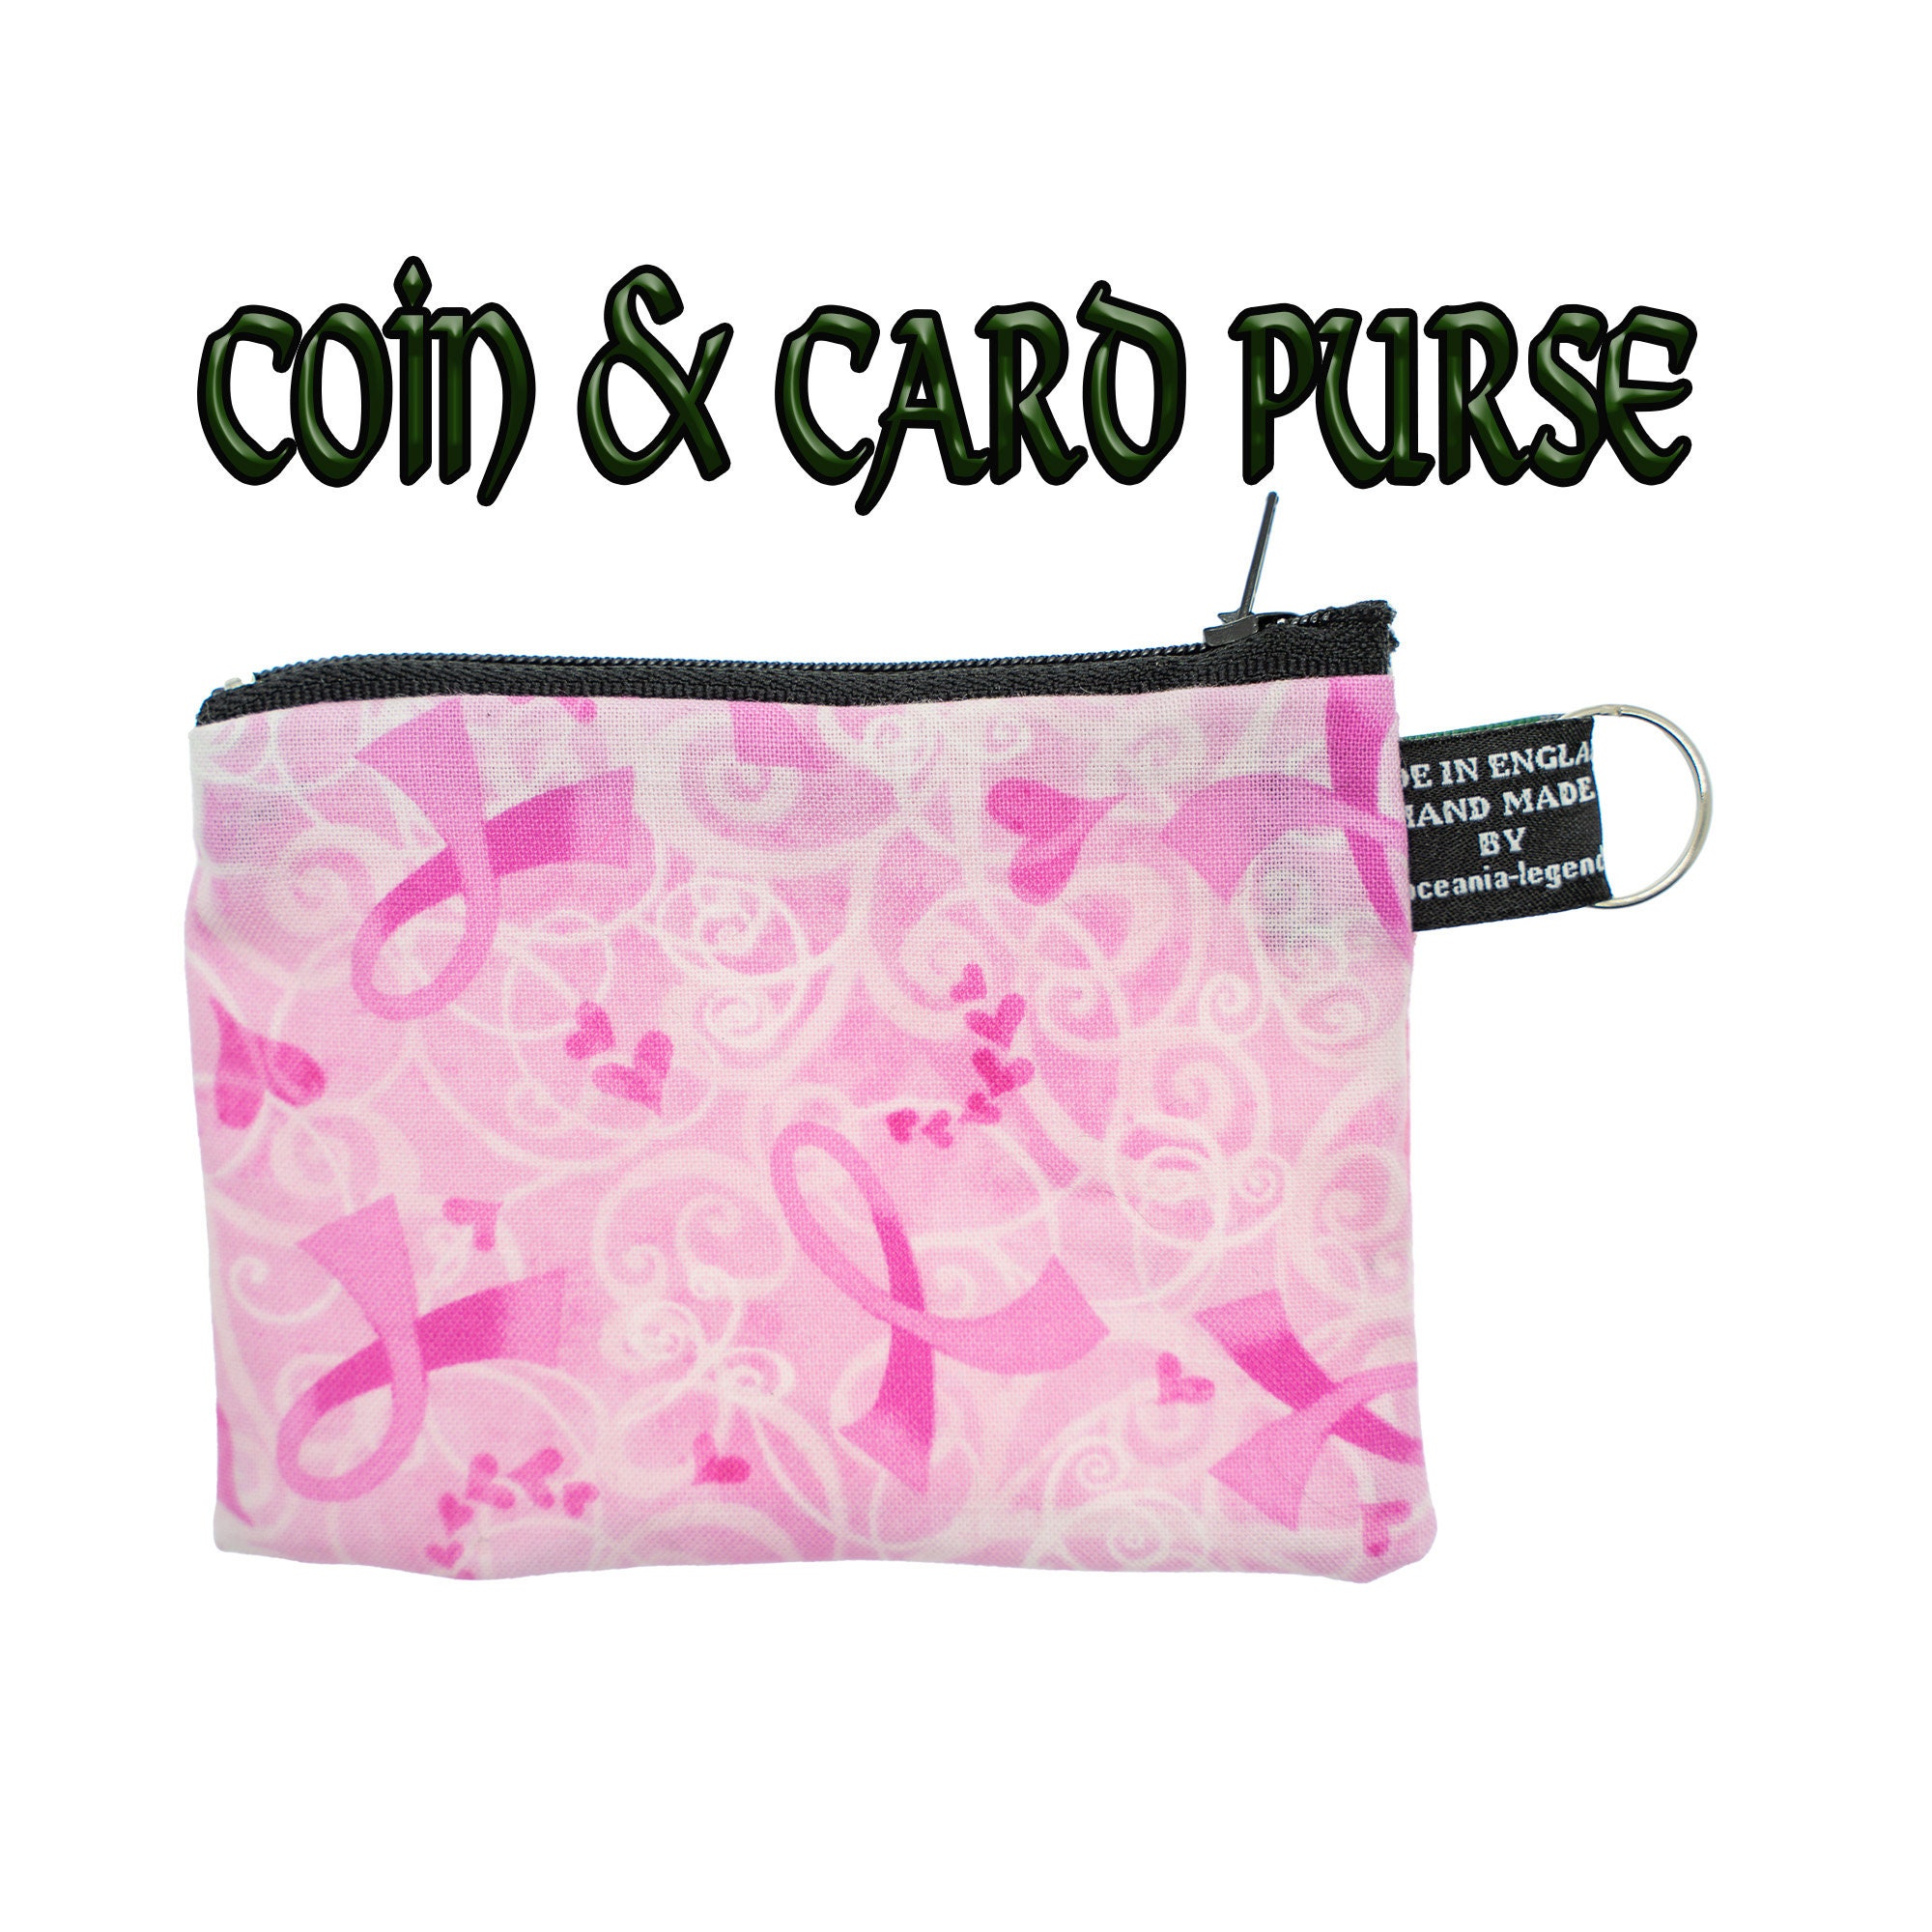 Little Bag of F*cks Coin Purse  Purple Coin Pouch Bag Wallet